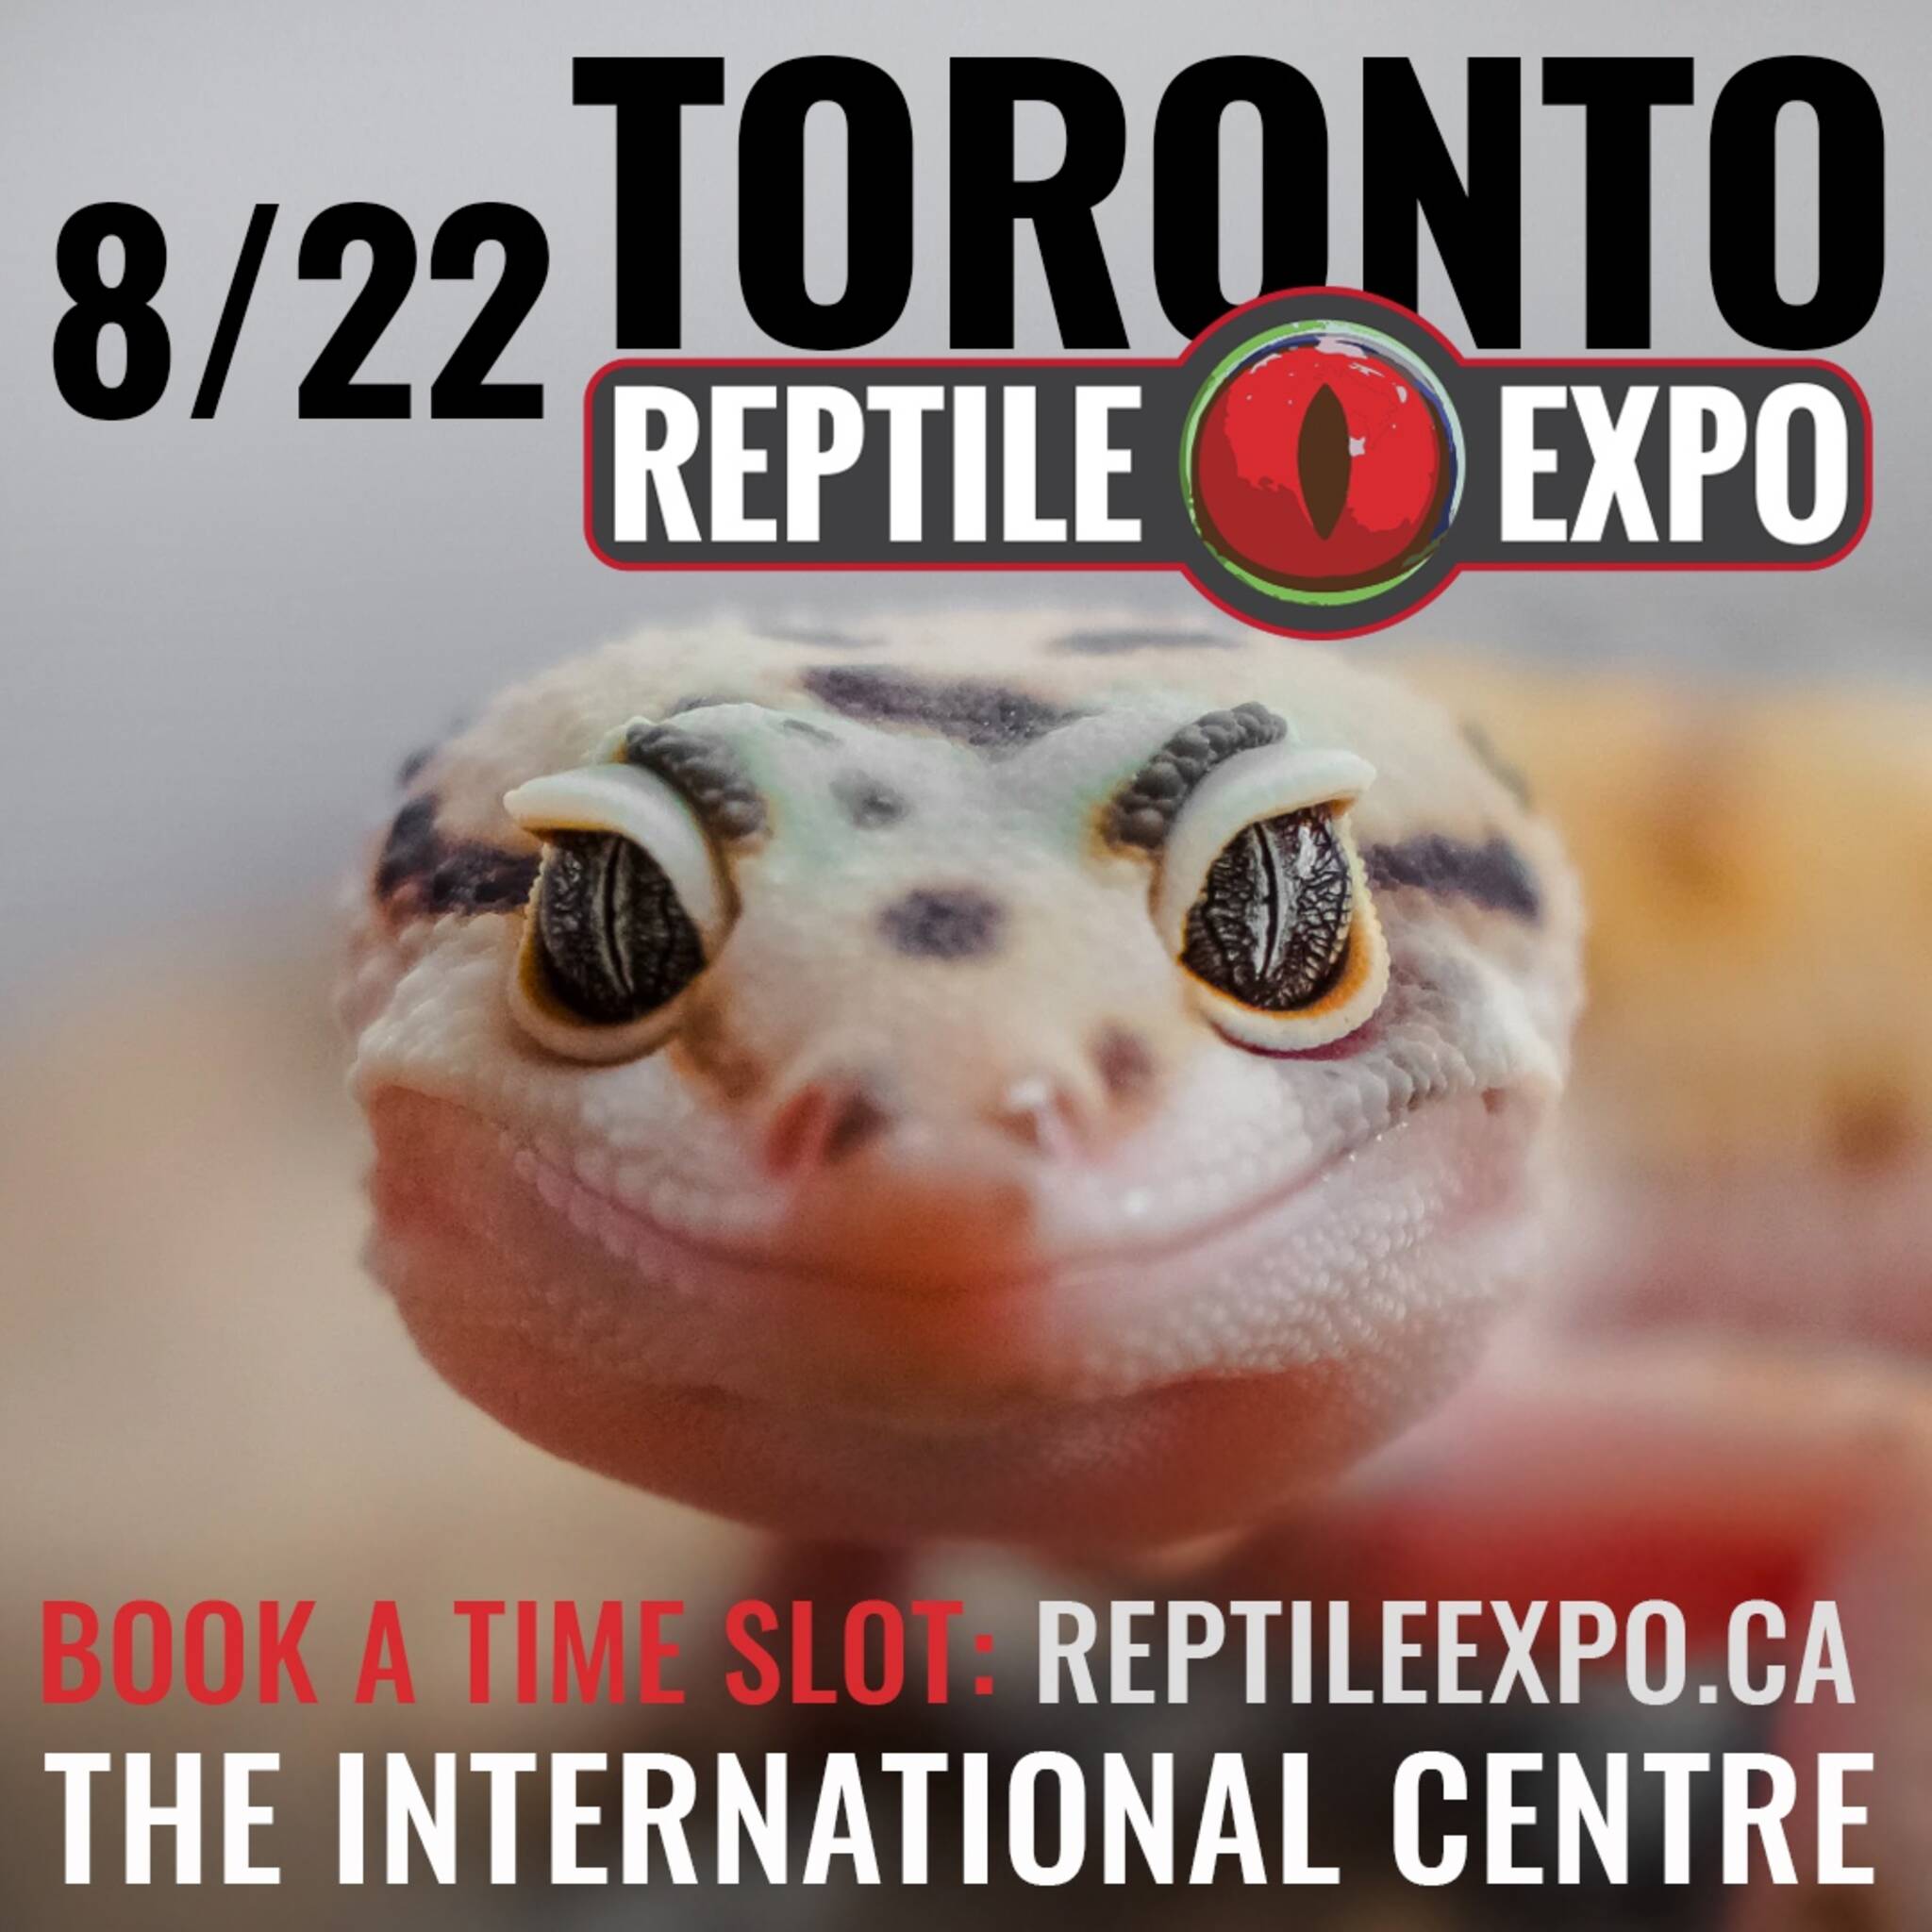 Toronto Reptile Expo August 22